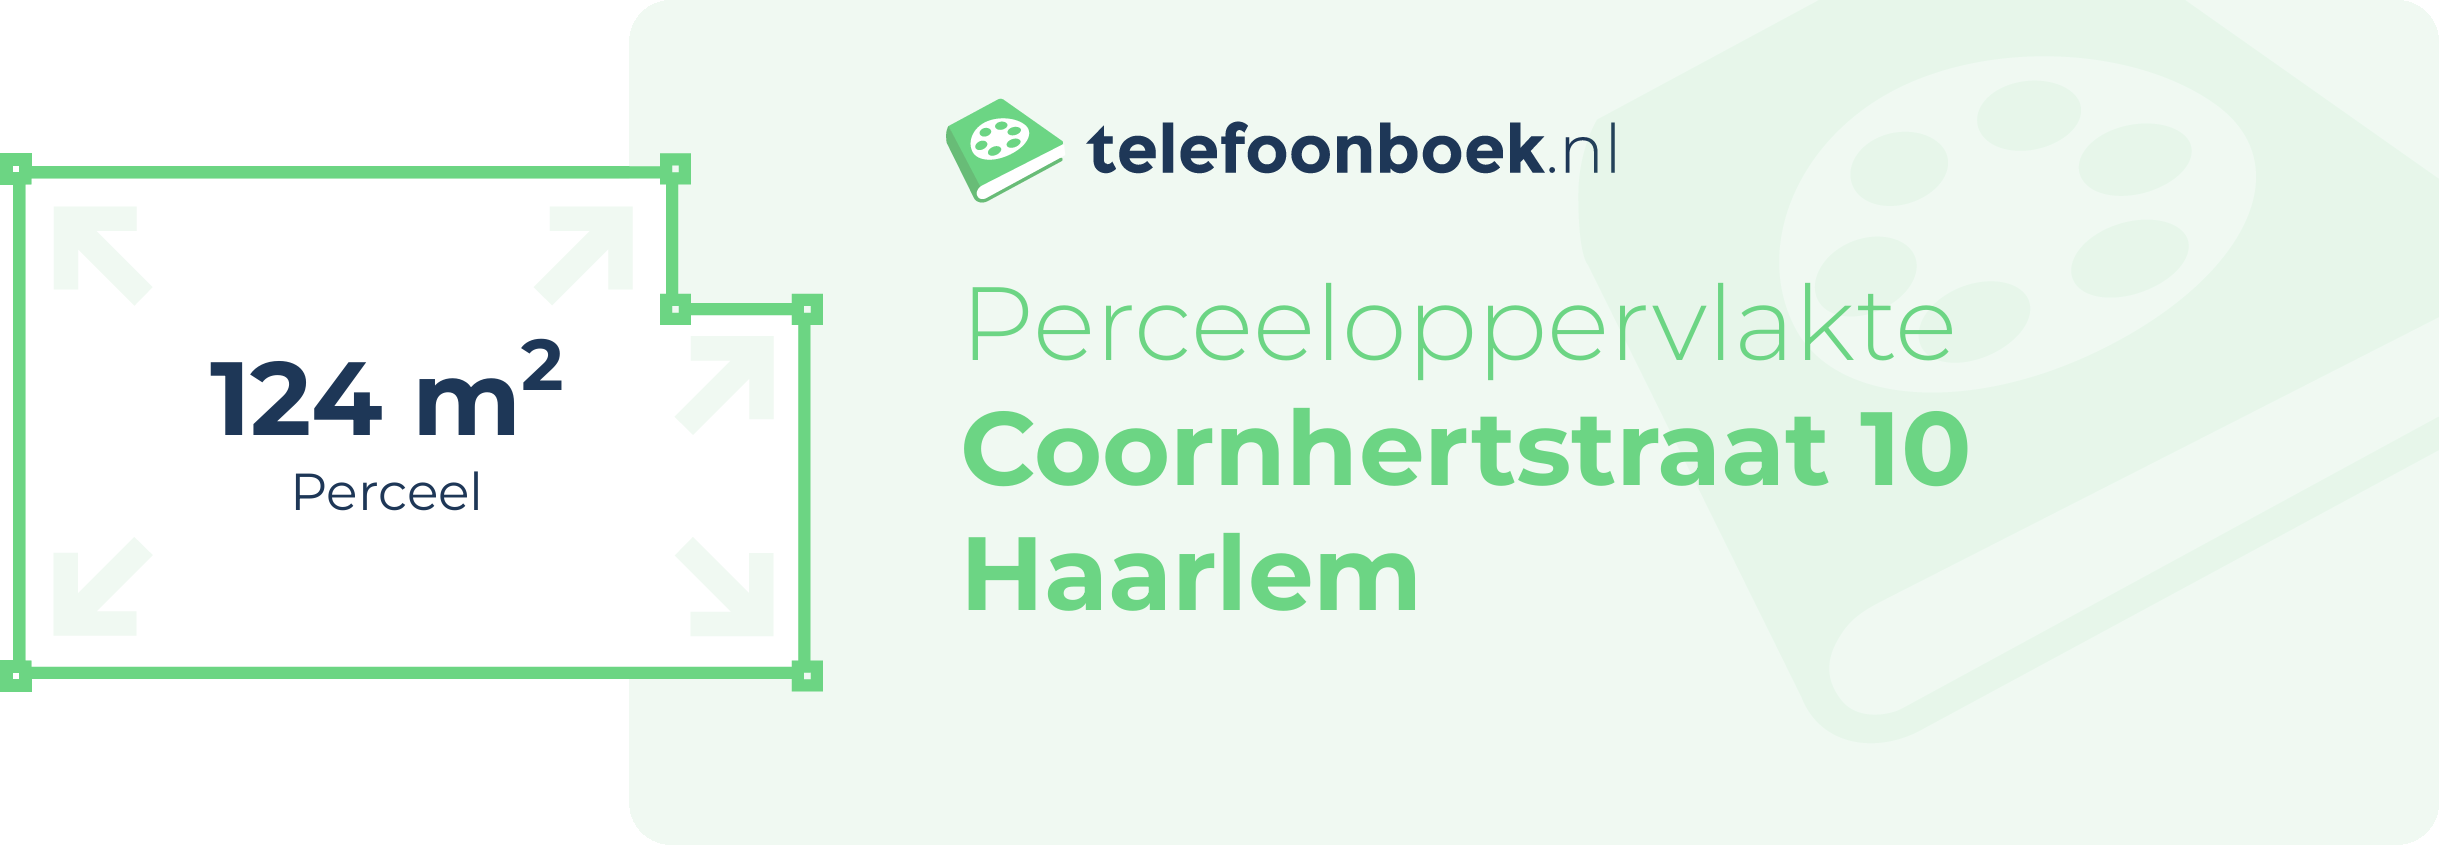 Perceeloppervlakte Coornhertstraat 10 Haarlem